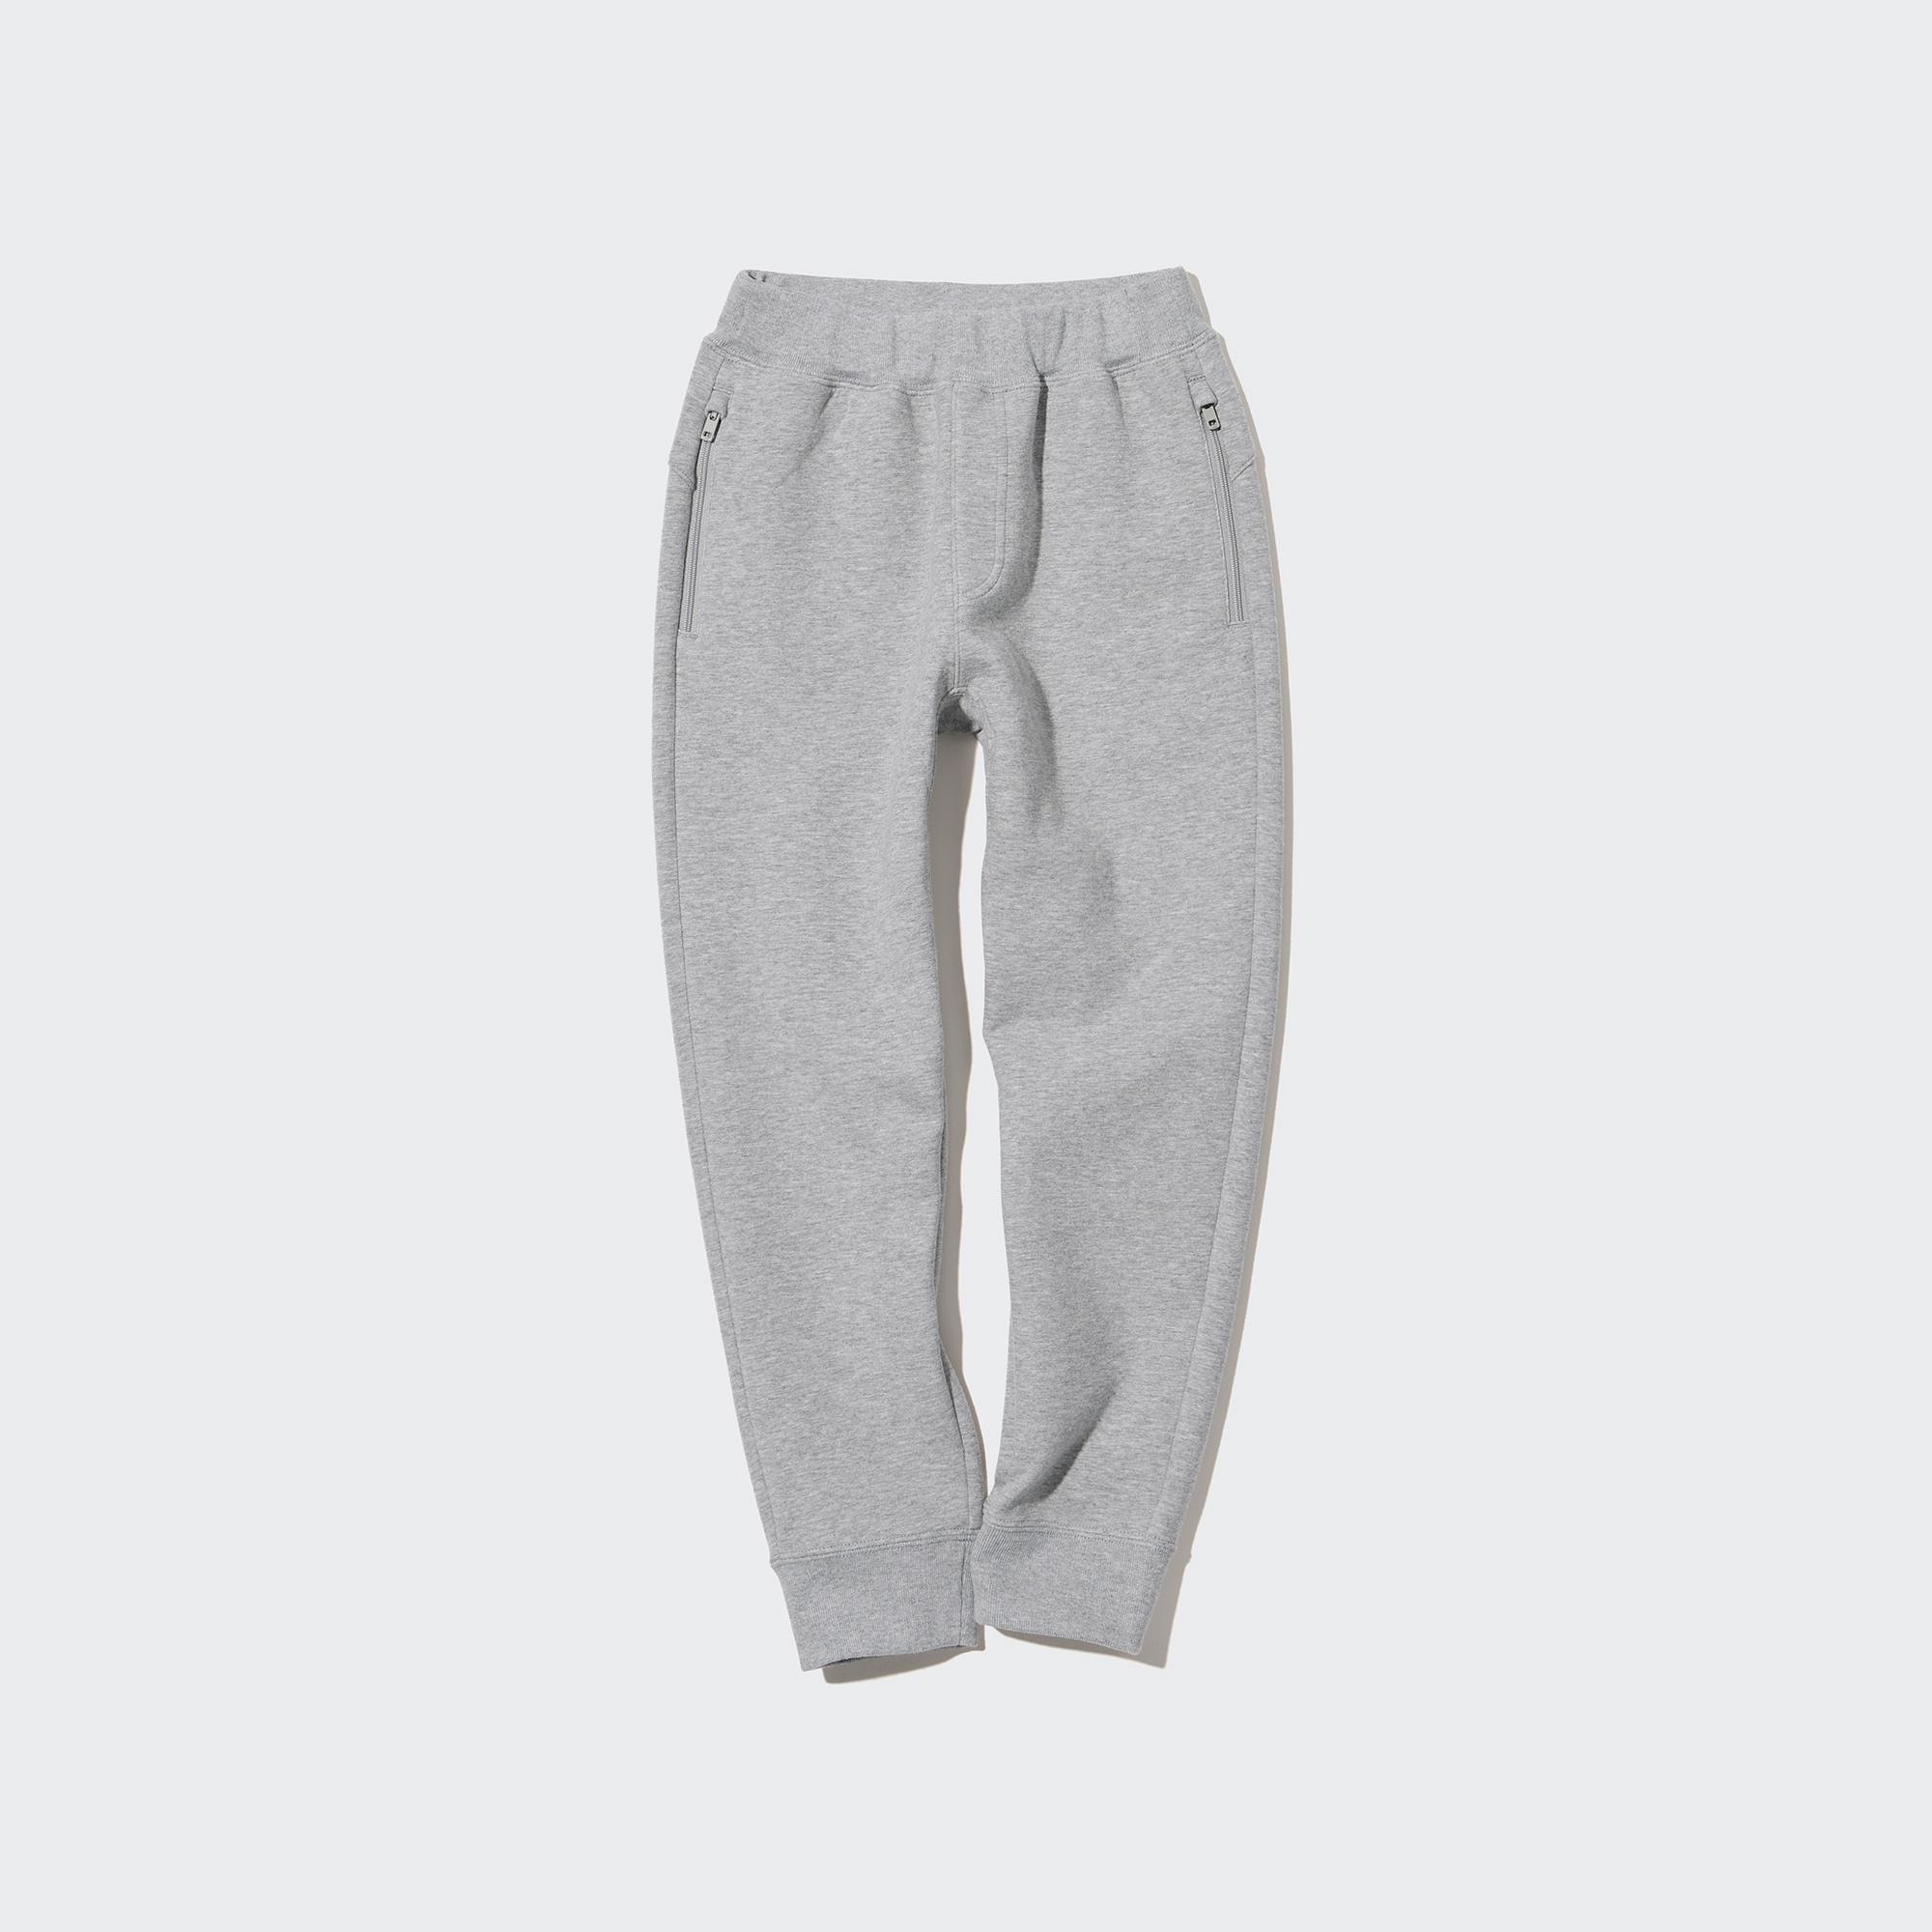 UNIQLO Ultra Stretch Dry Sweatpants | StyleHint